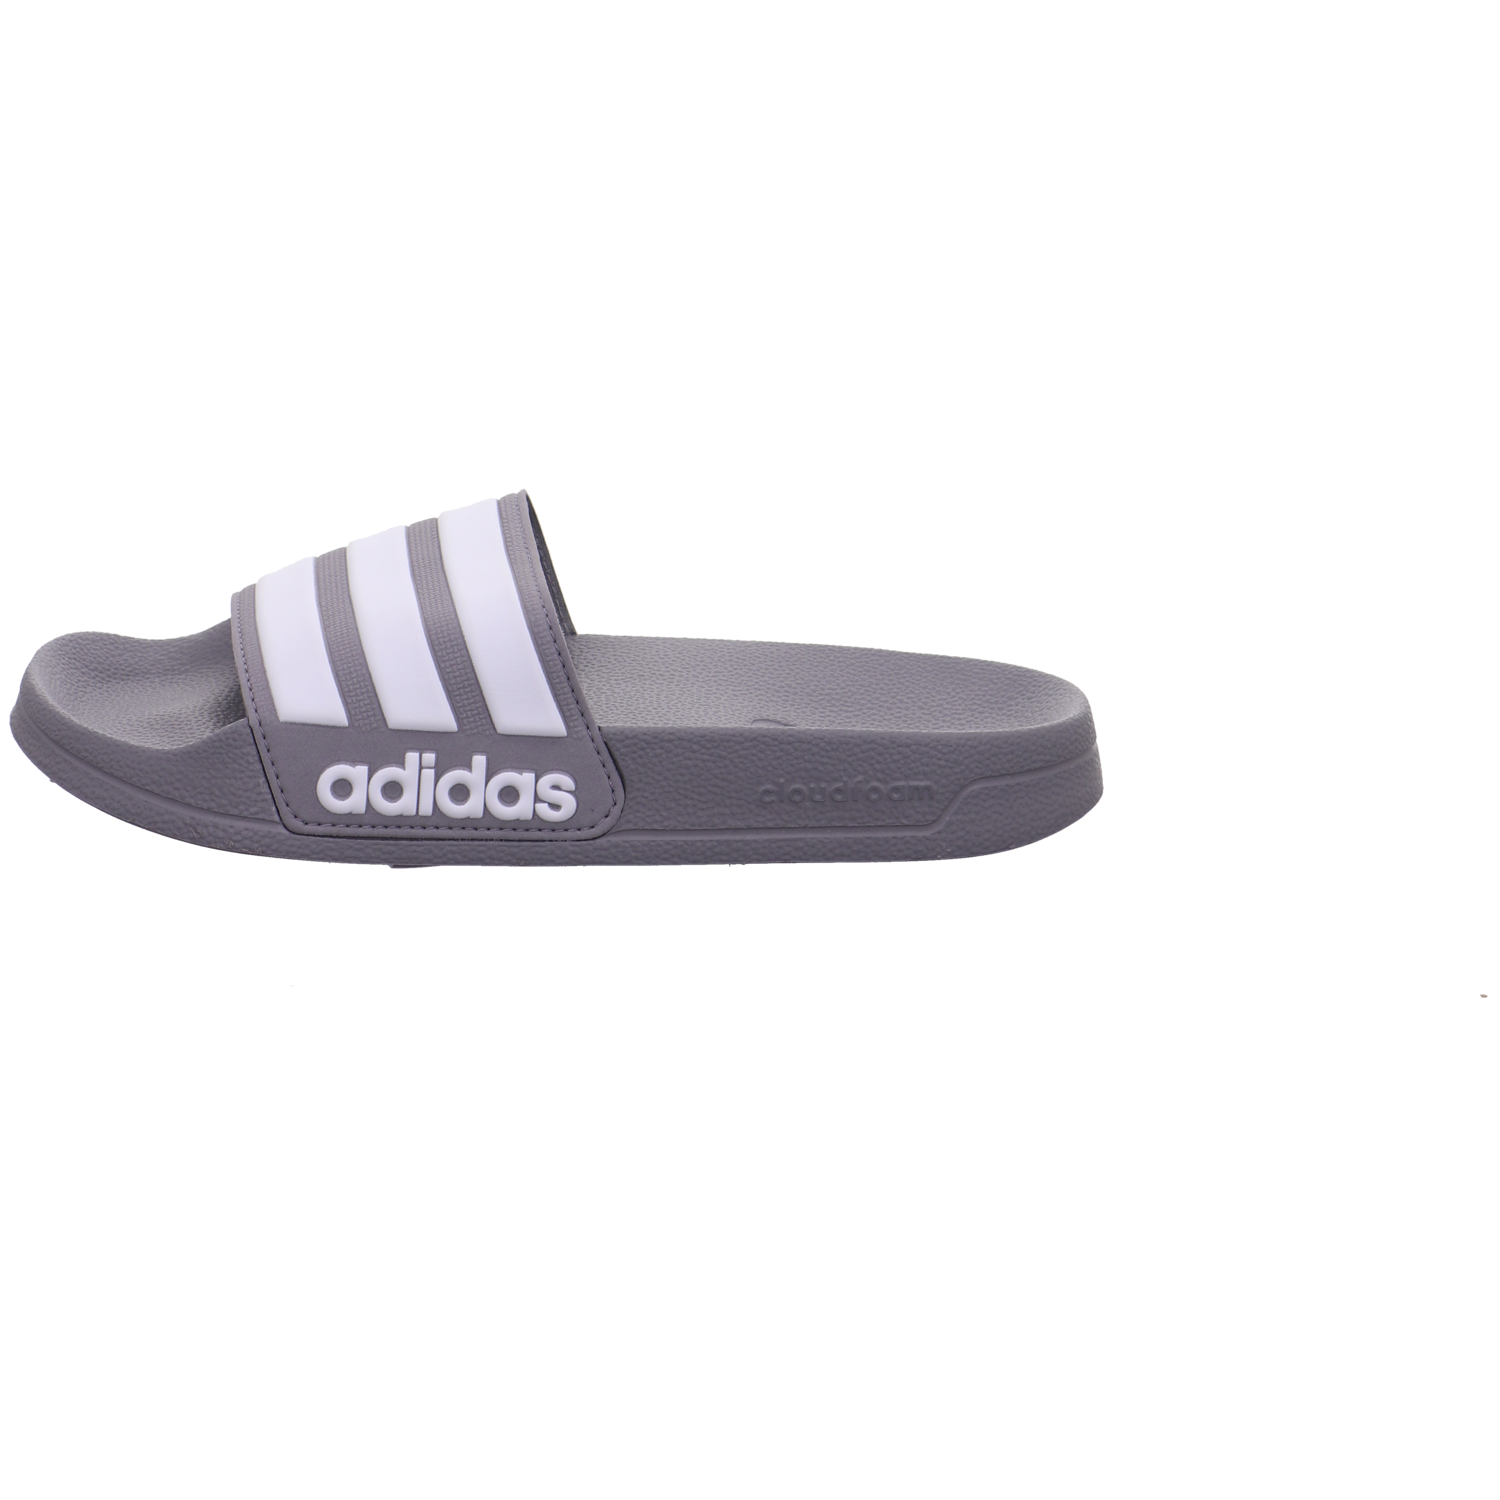 Adidas Schuhe  grau kombi Bild1